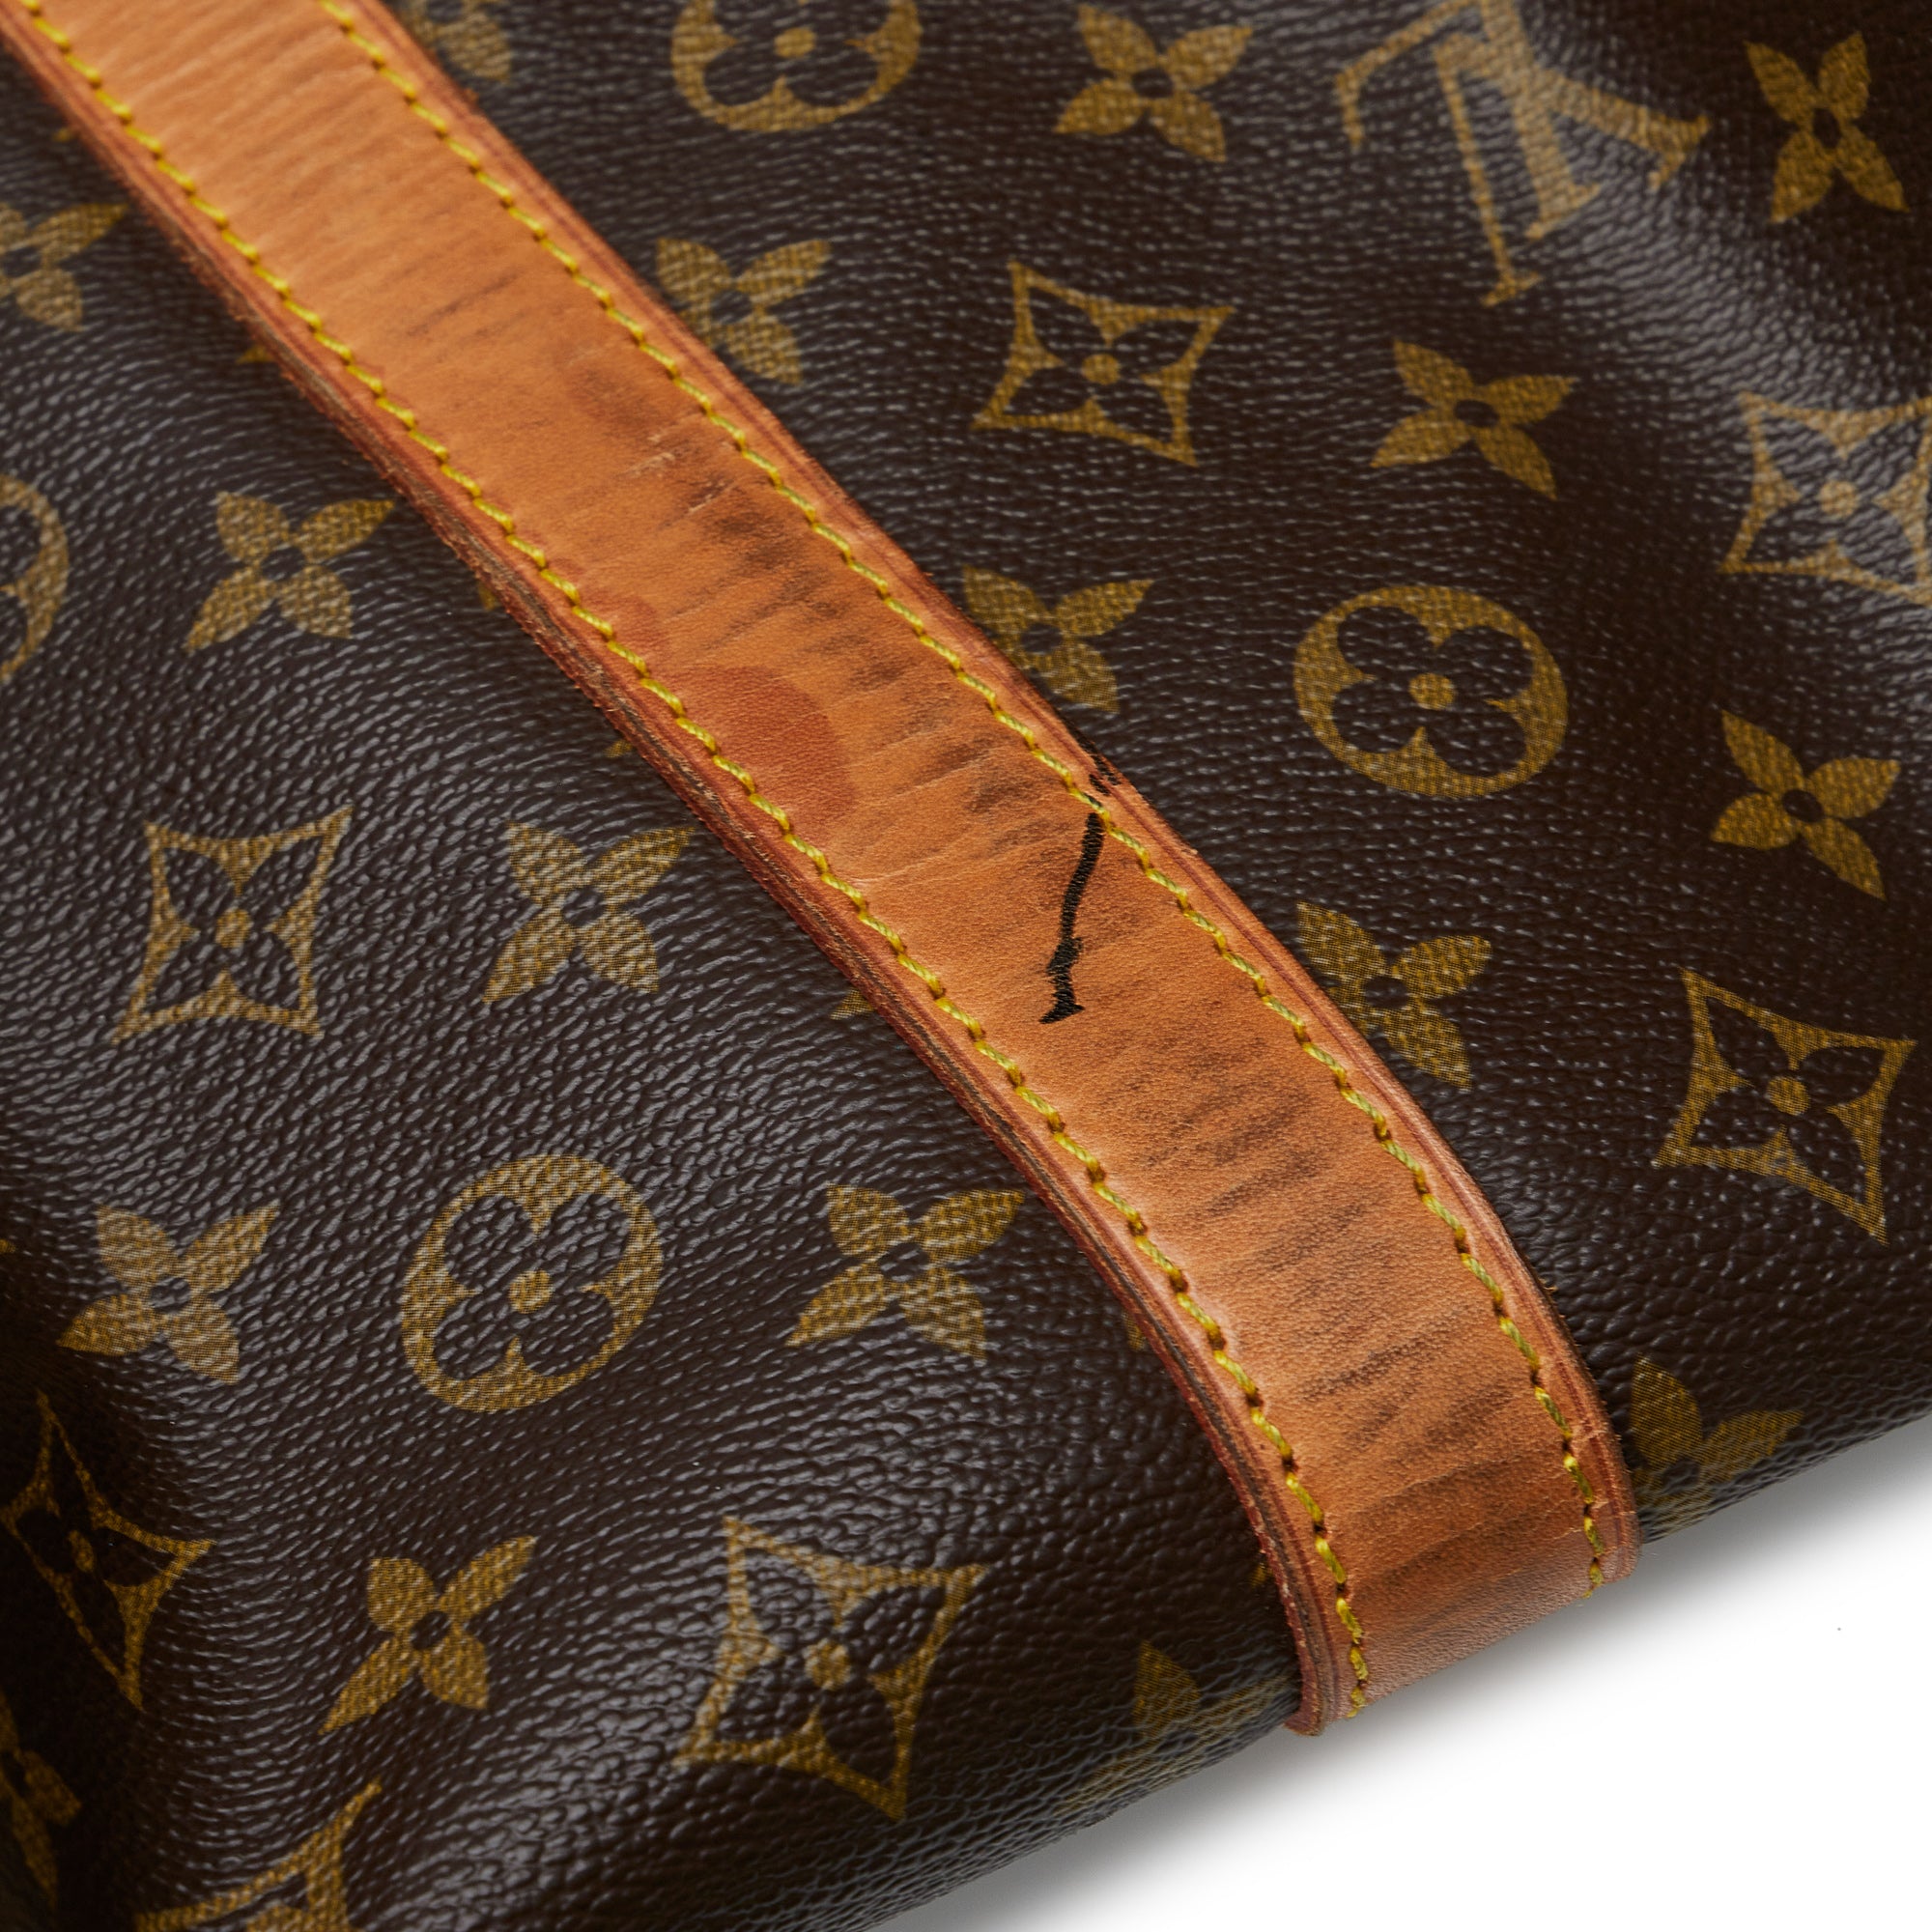 Brown Louis Vuitton Monogram Keepall 60 Travel Bag, RvceShops Revival